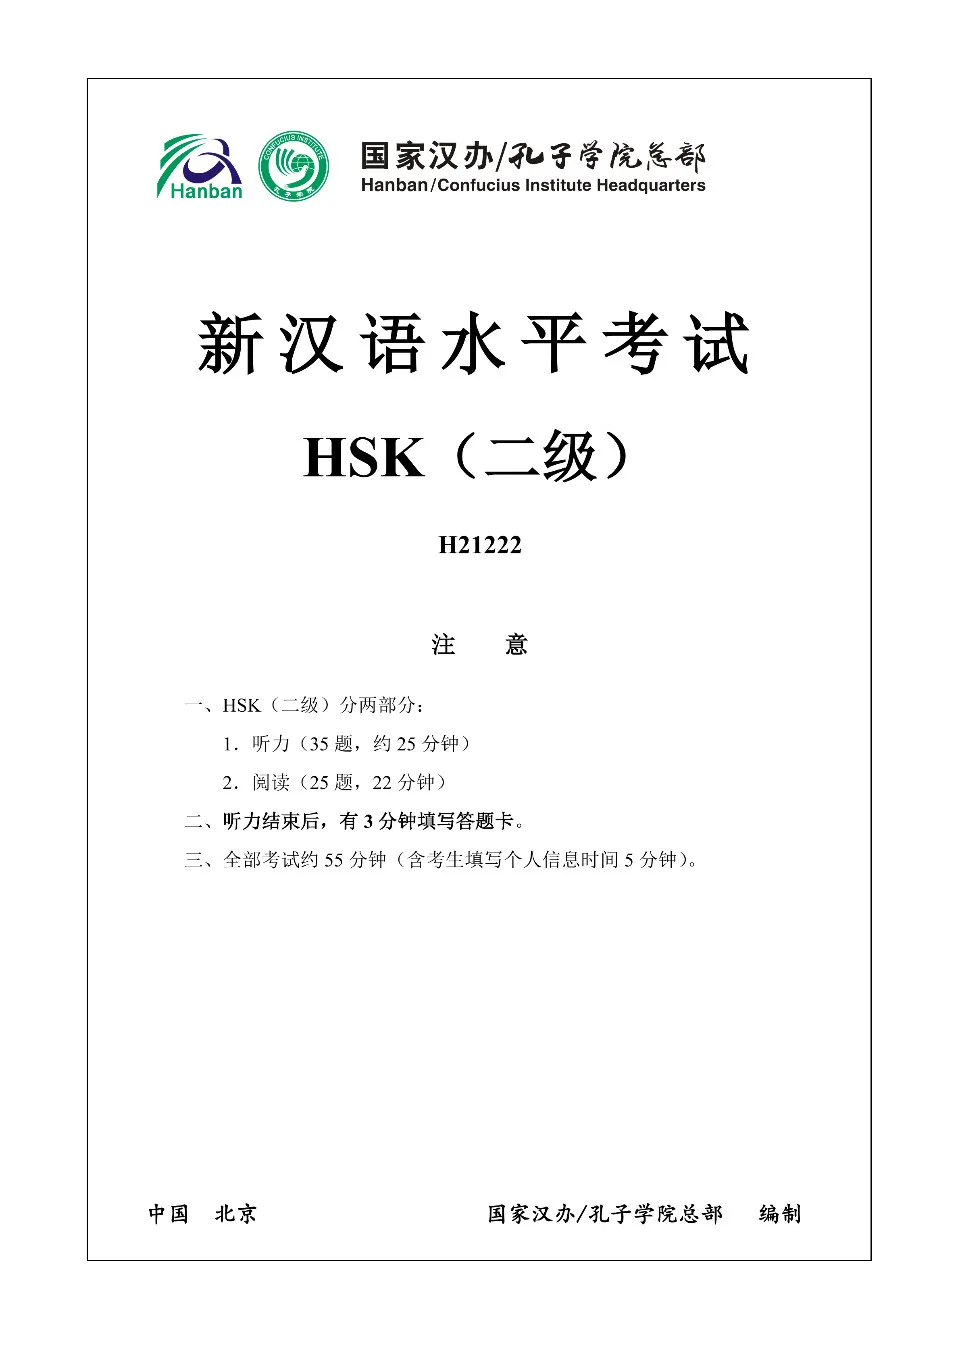 PDF) HSK 2, H21222 tesst paper